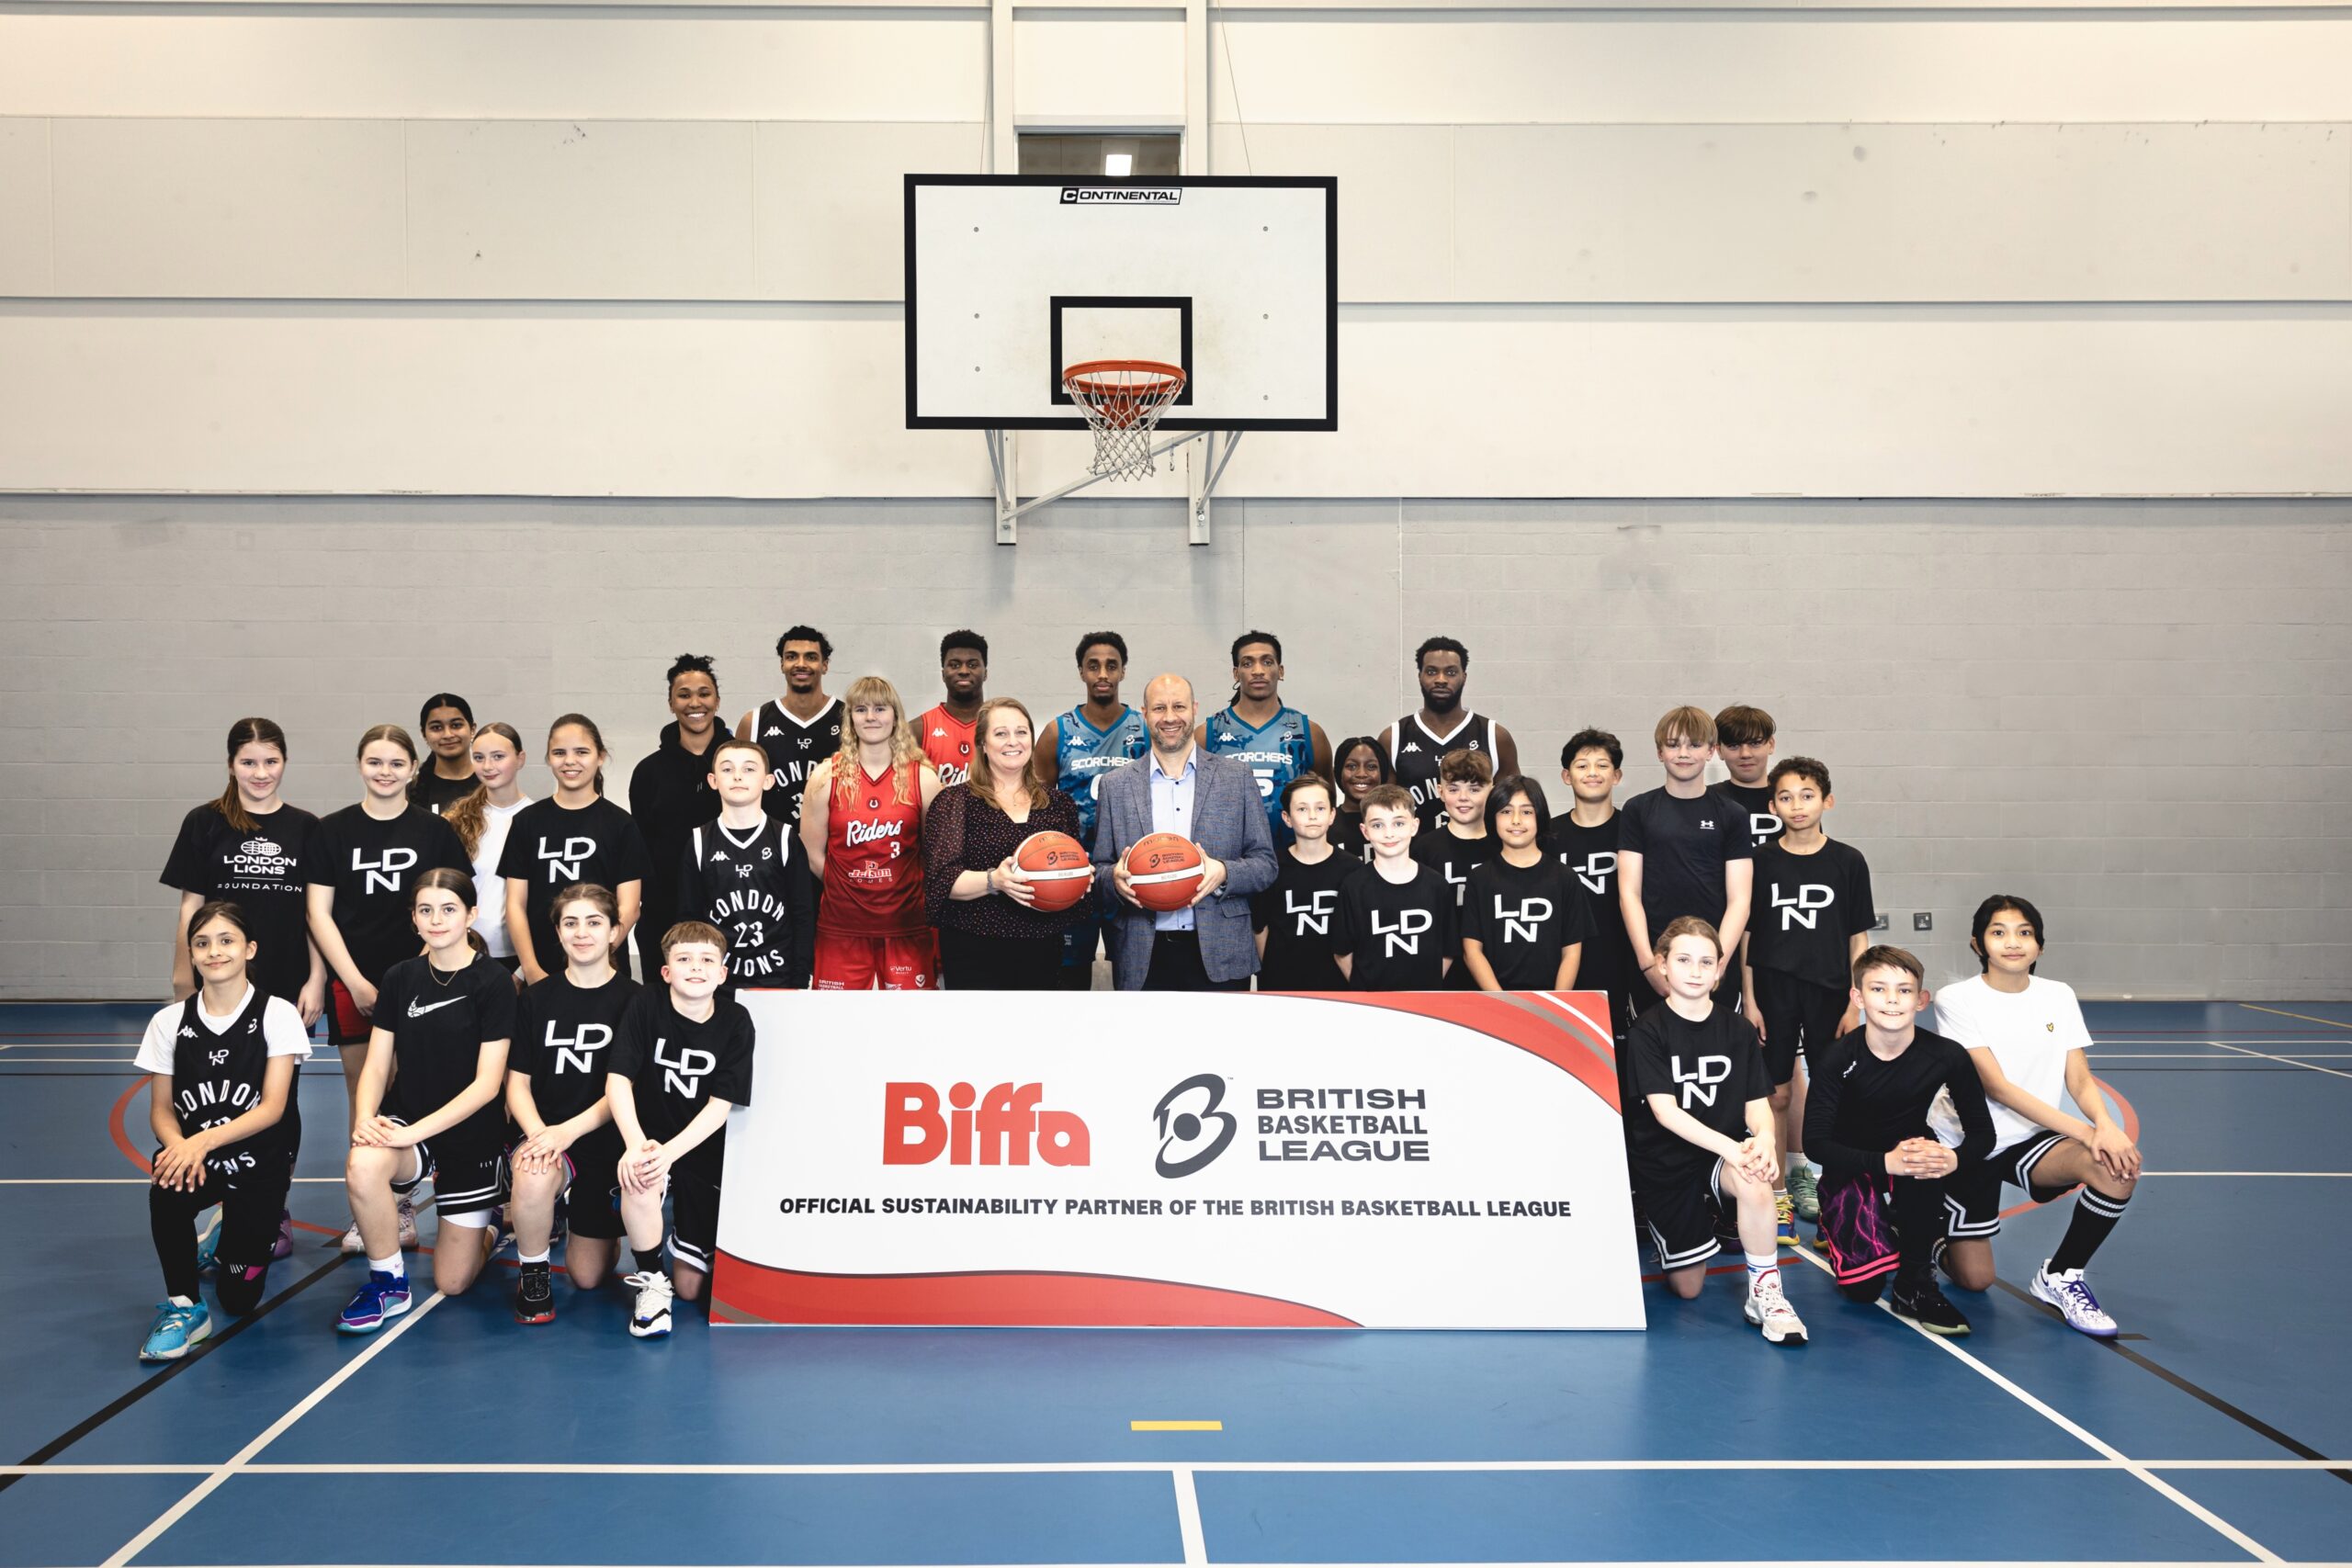 Biffa teams up with British Basketball League – letsrecycle.com